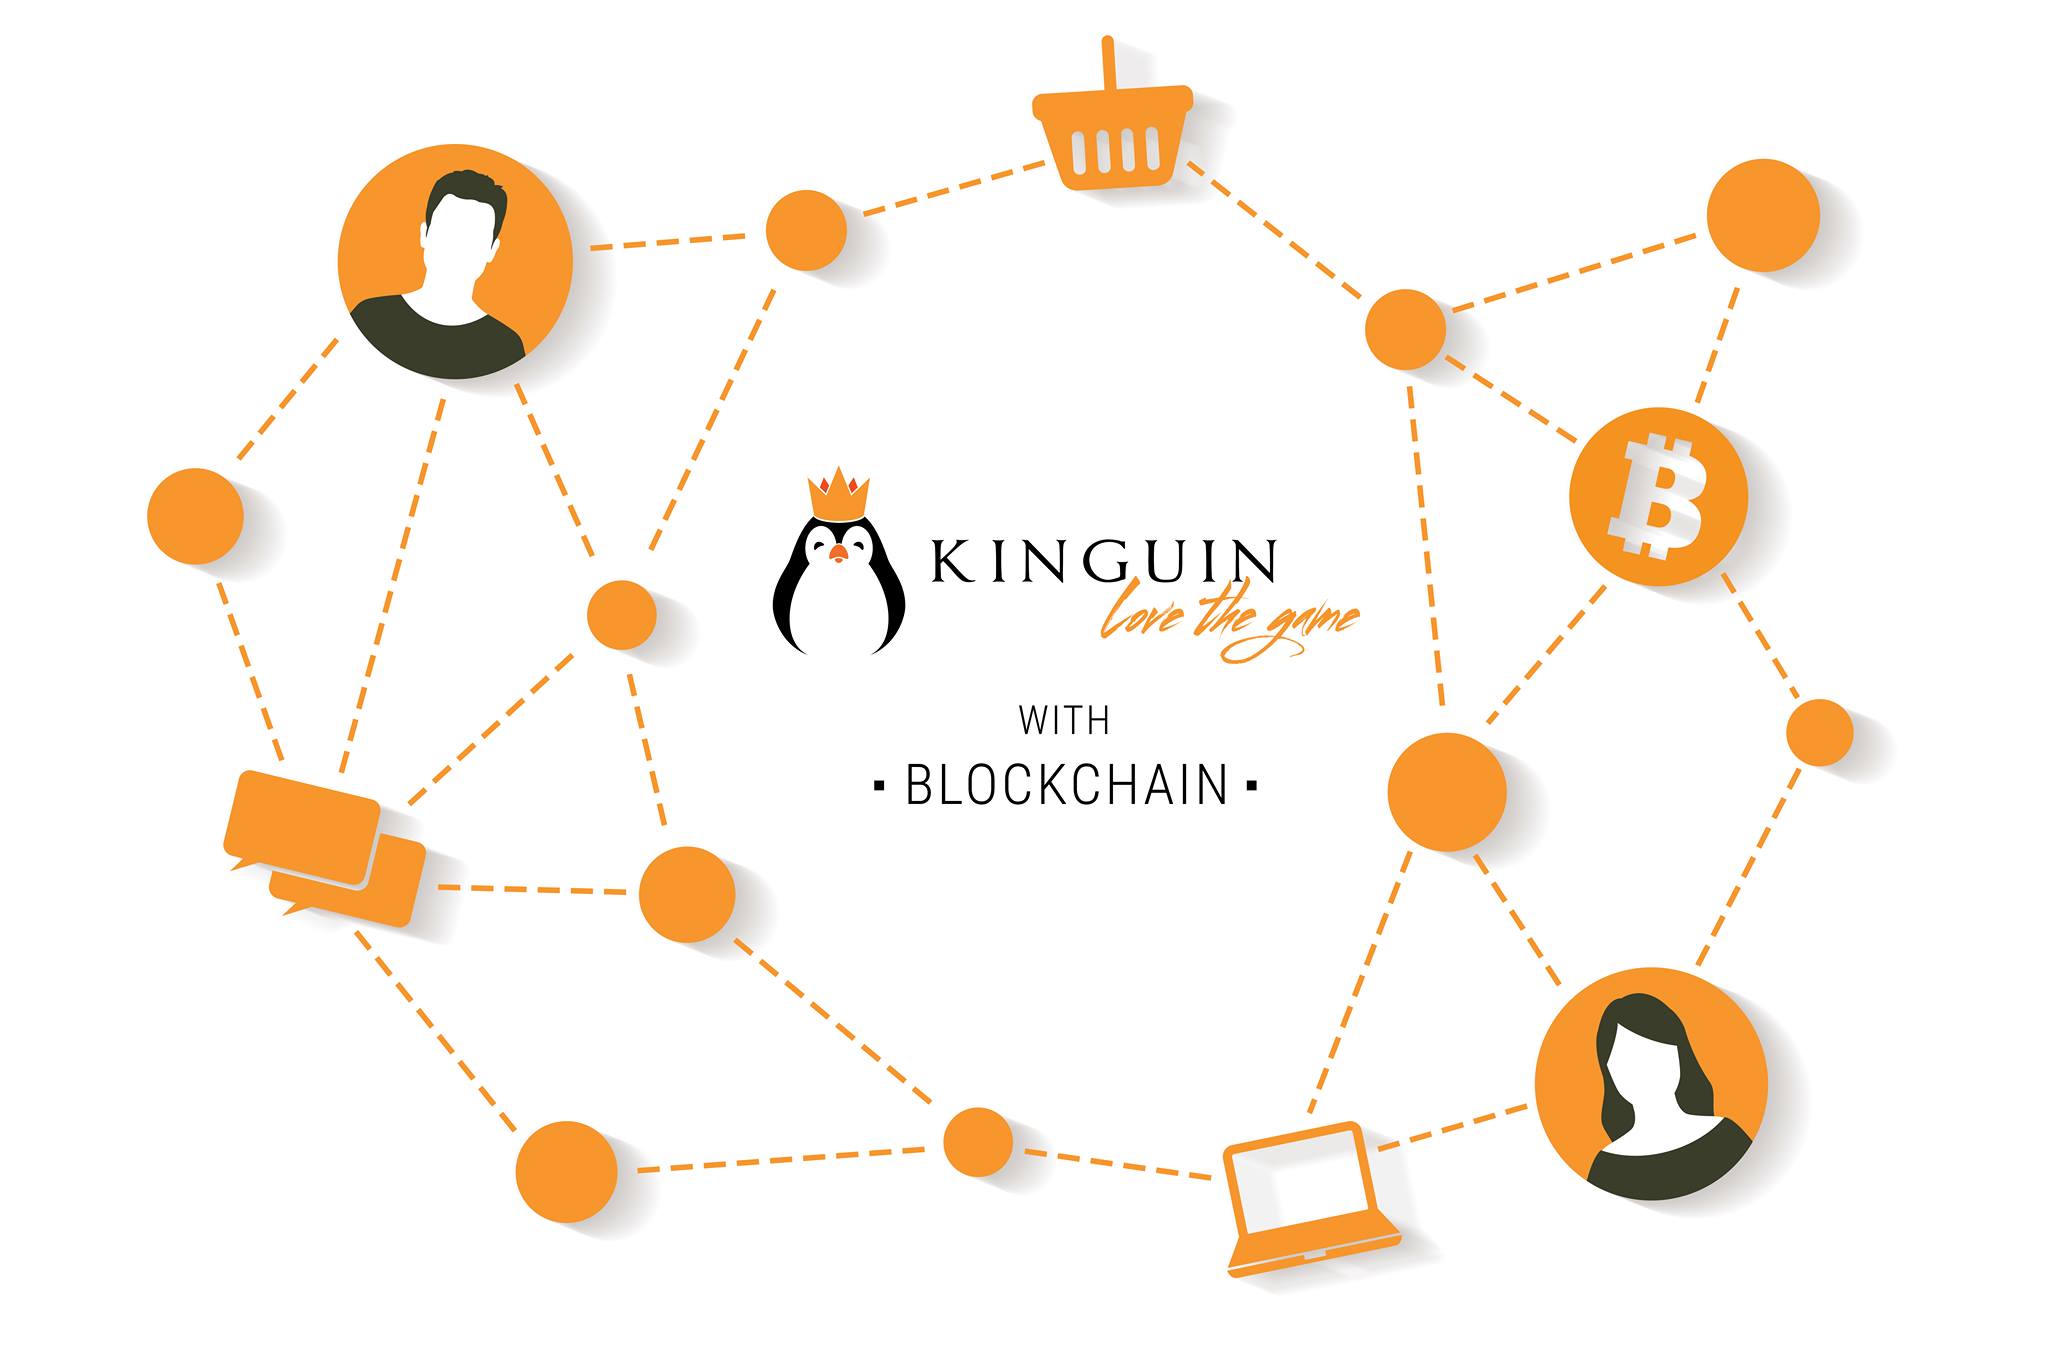 Kinguin-with-Blockchain.jpg